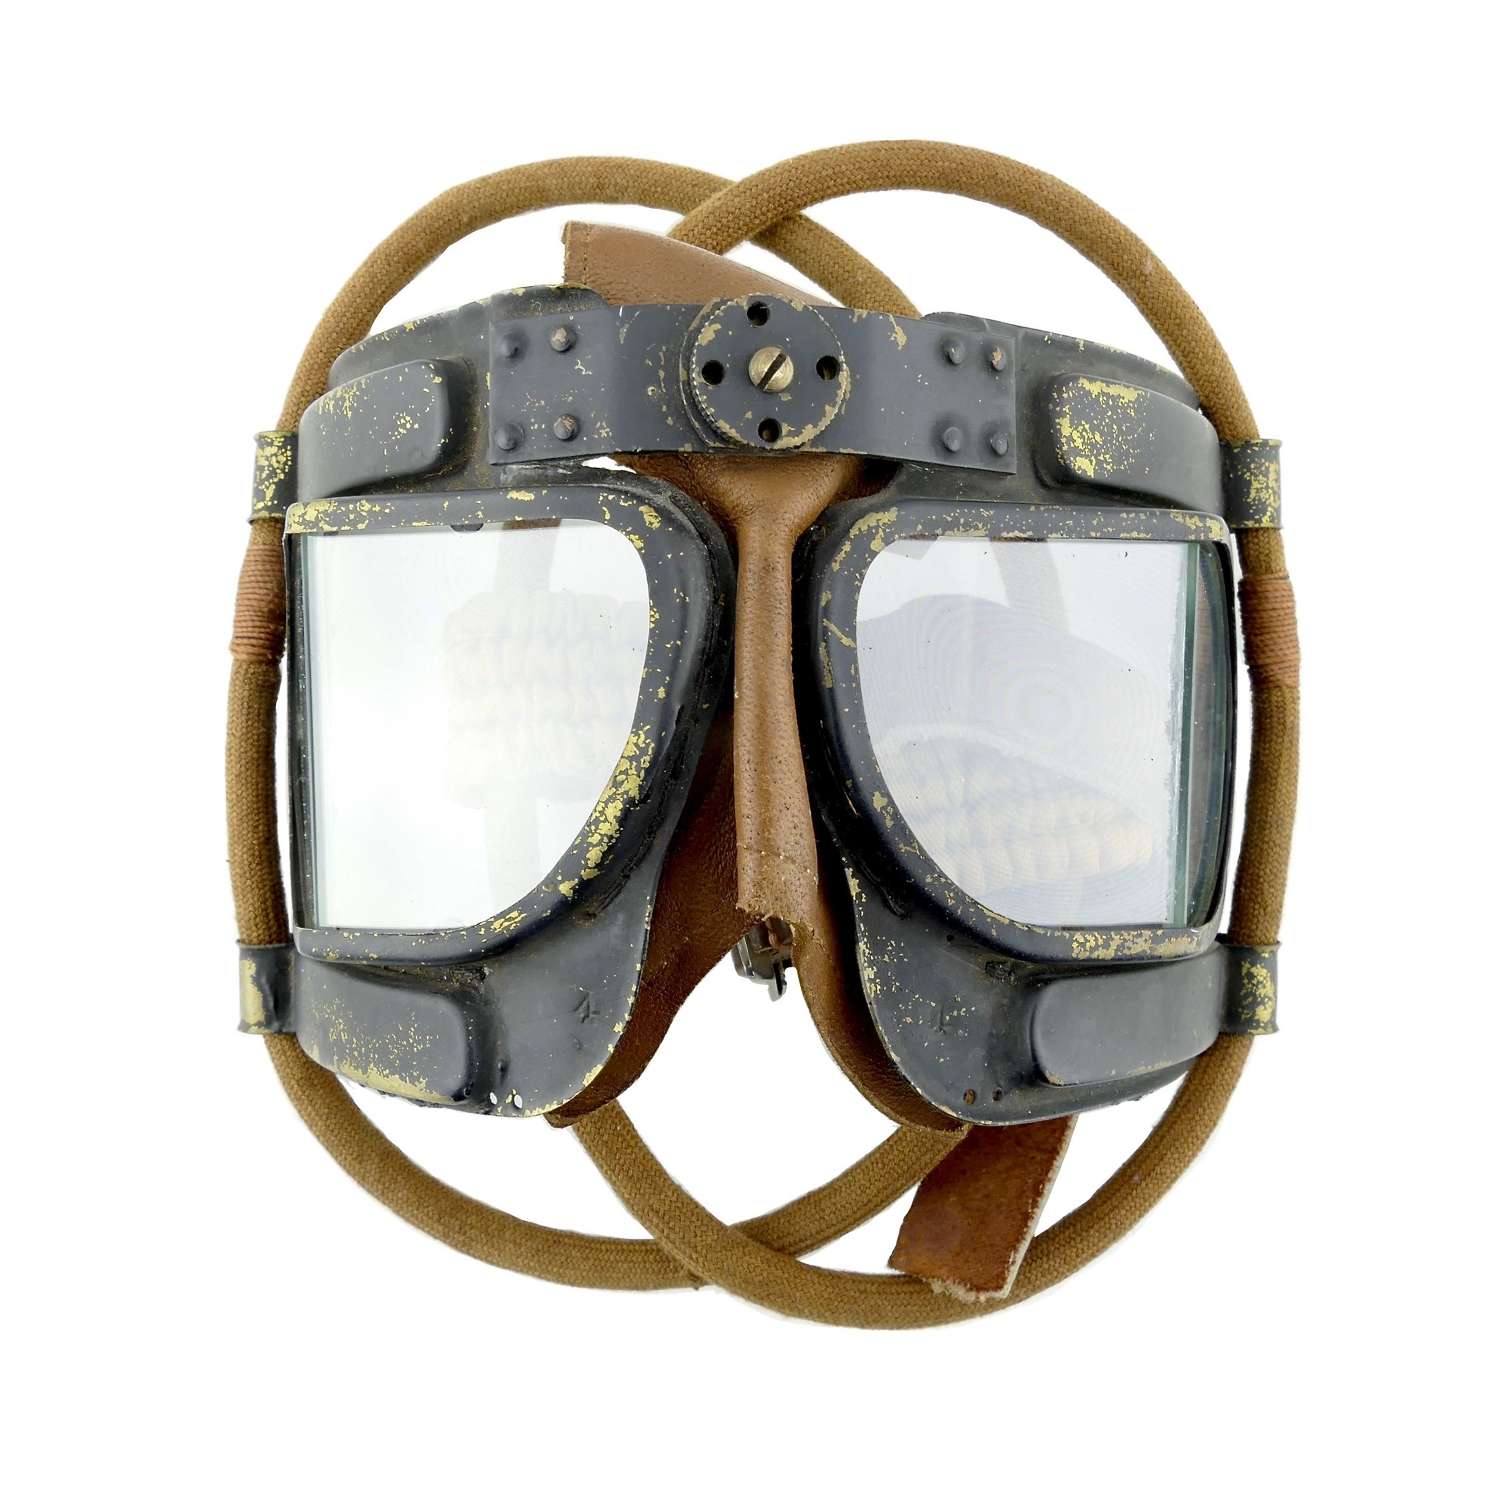 RAF Mk.IVB flying goggles